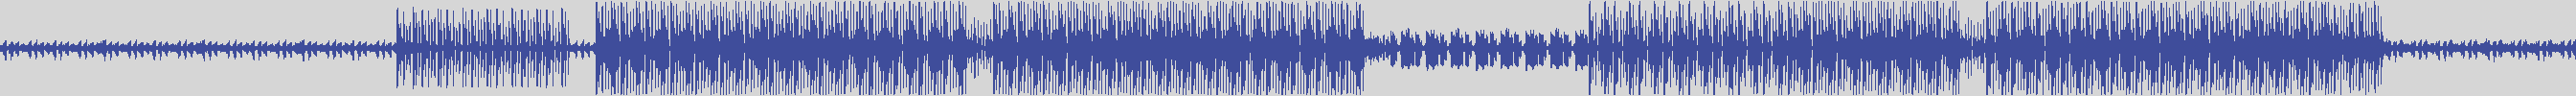 noclouds_chillout [NOC057] Glenn Edwads - Pure Water [Ibizenka Mix] audio wave form